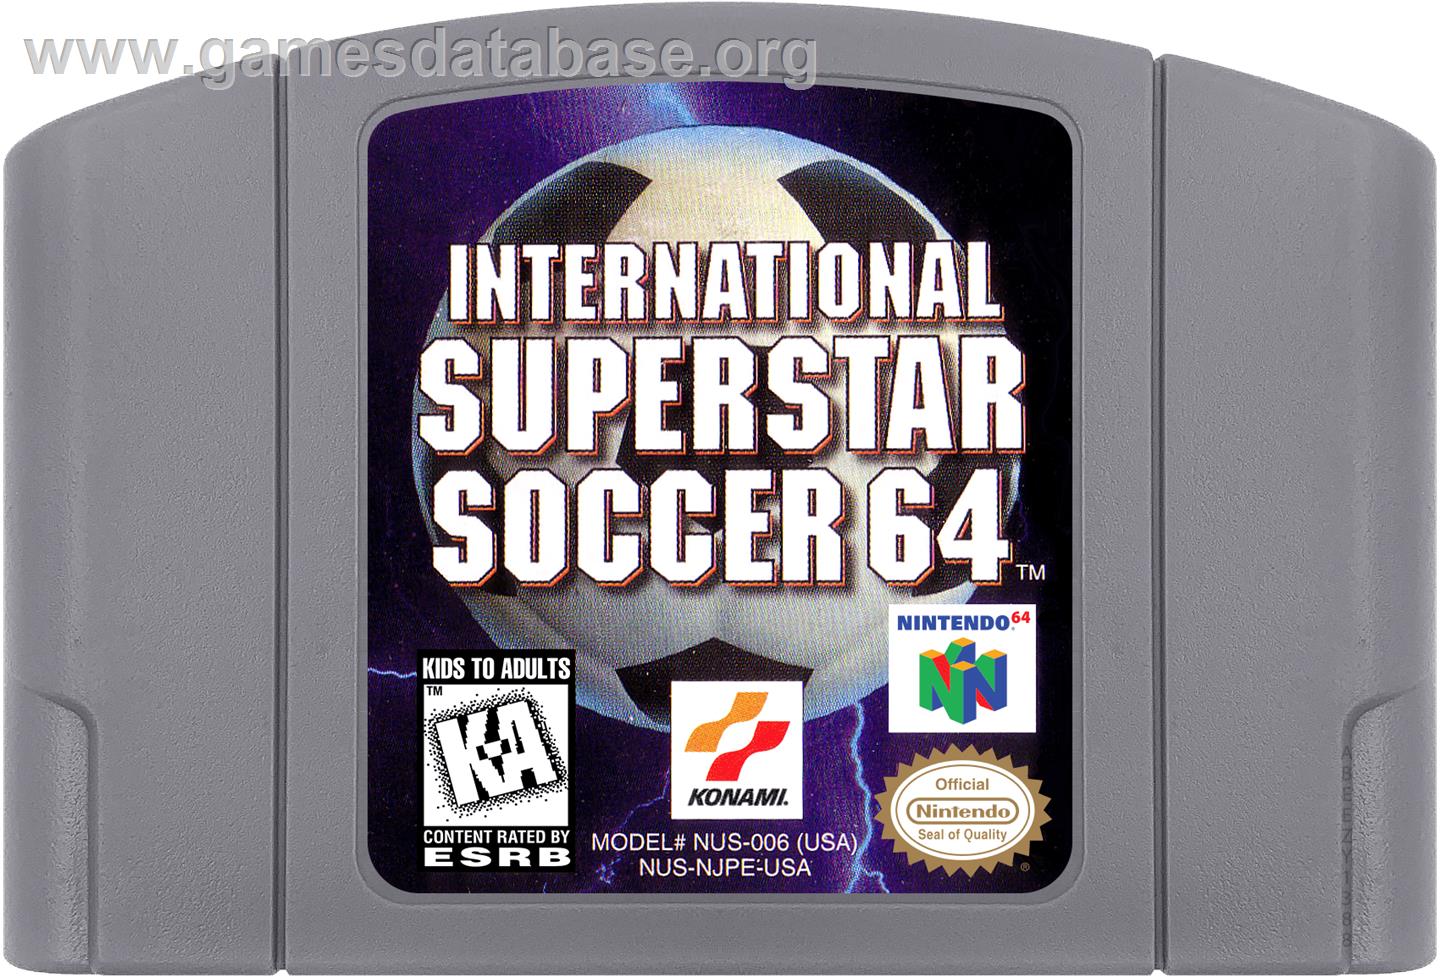 International Superstar Soccer 64 - Nintendo N64 - Artwork - Cartridge